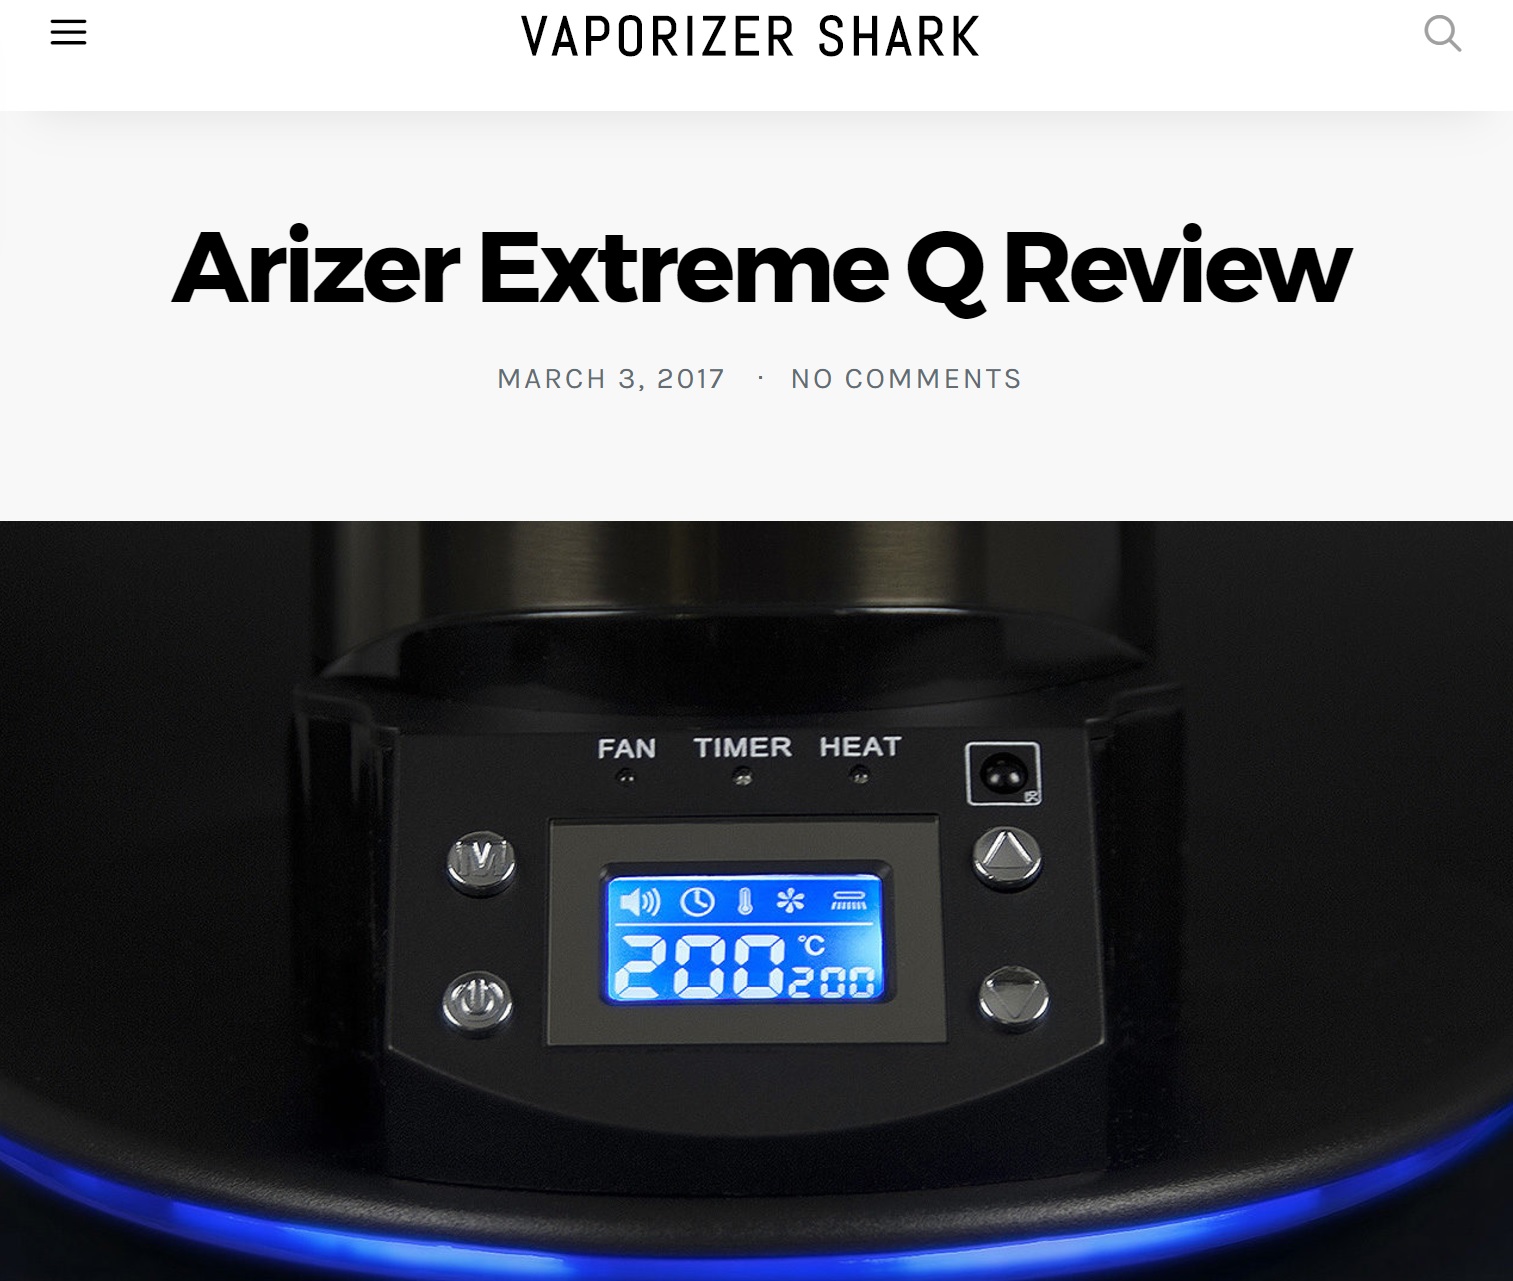 VaporizerShark.com's Arizer Extreme Q Review